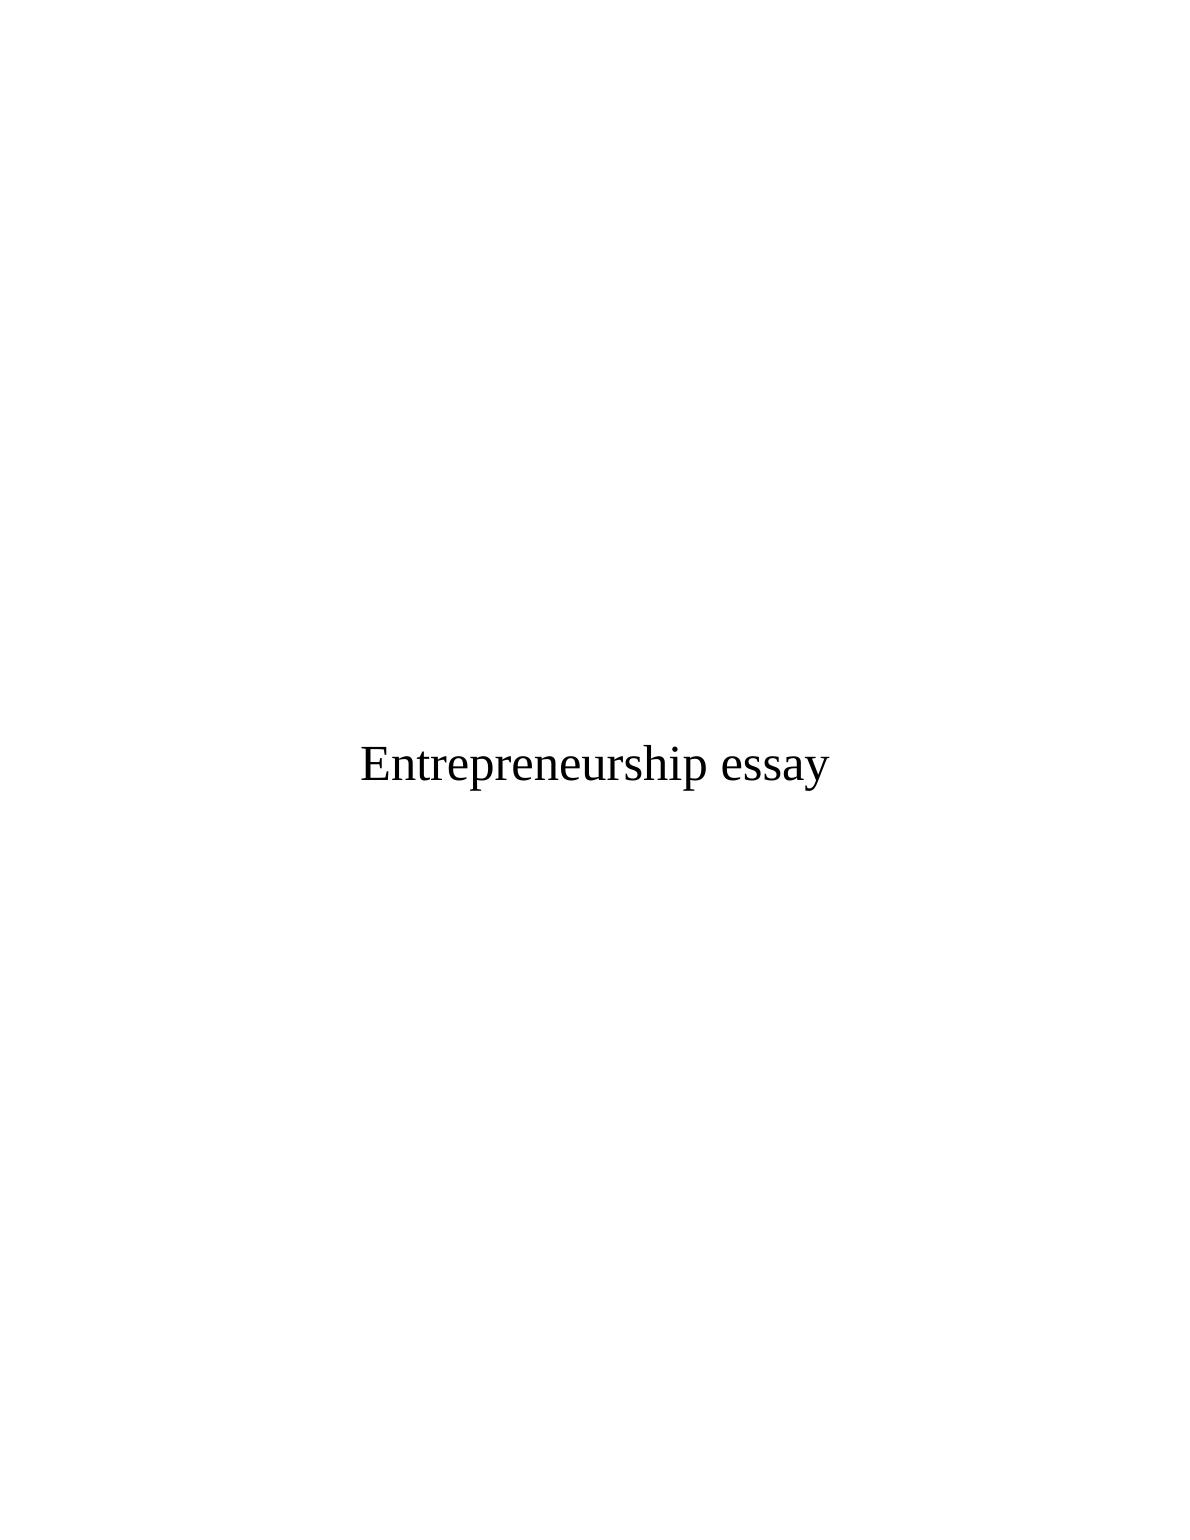 entrepreneurship essay grade 11